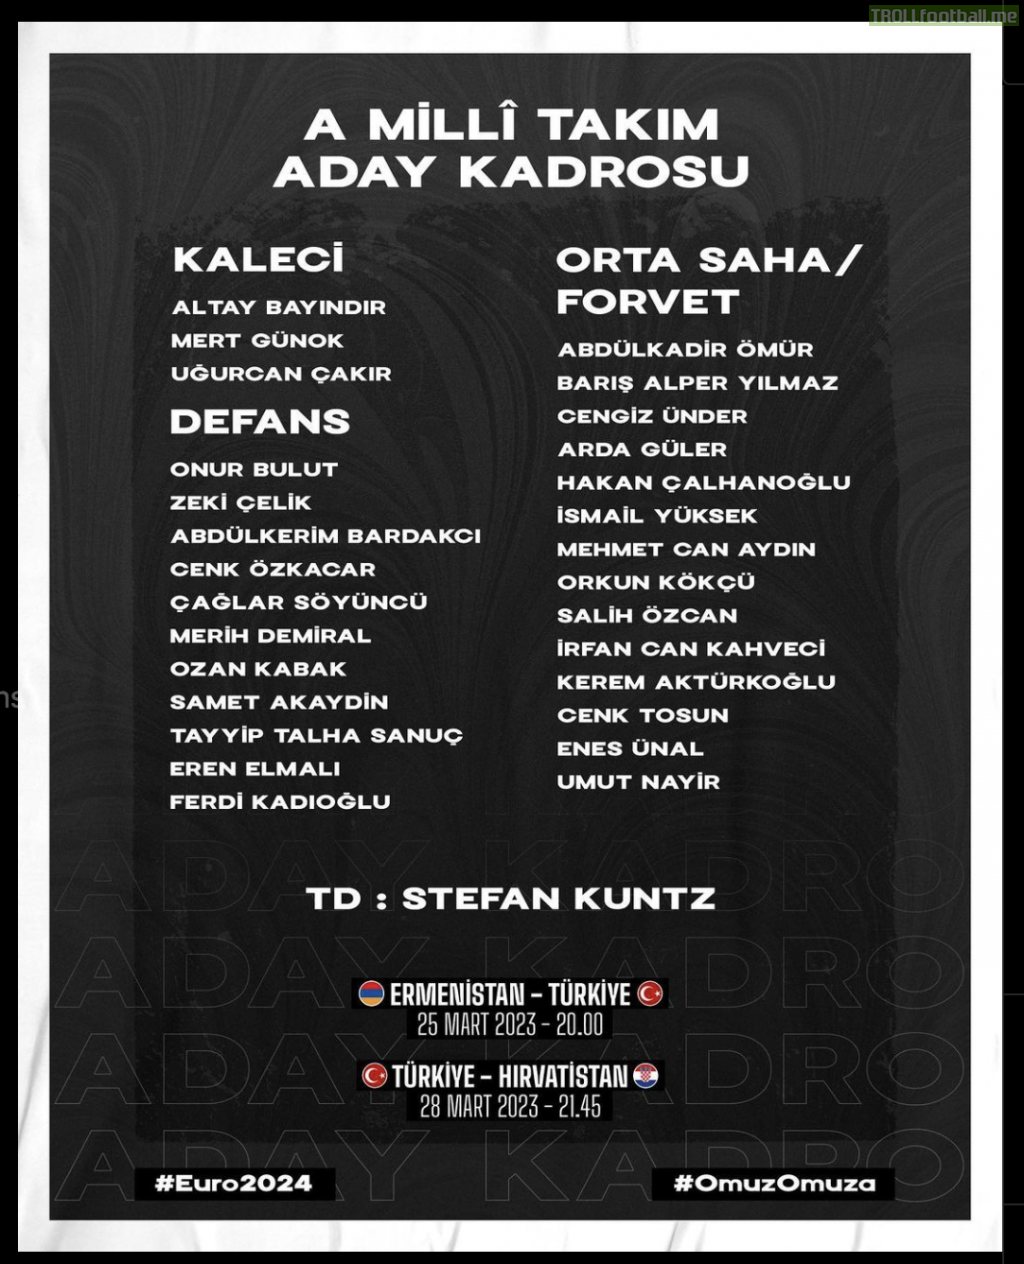 Türkiye Squad for Euro 2024 Qualifiers against Armenia and Croatia